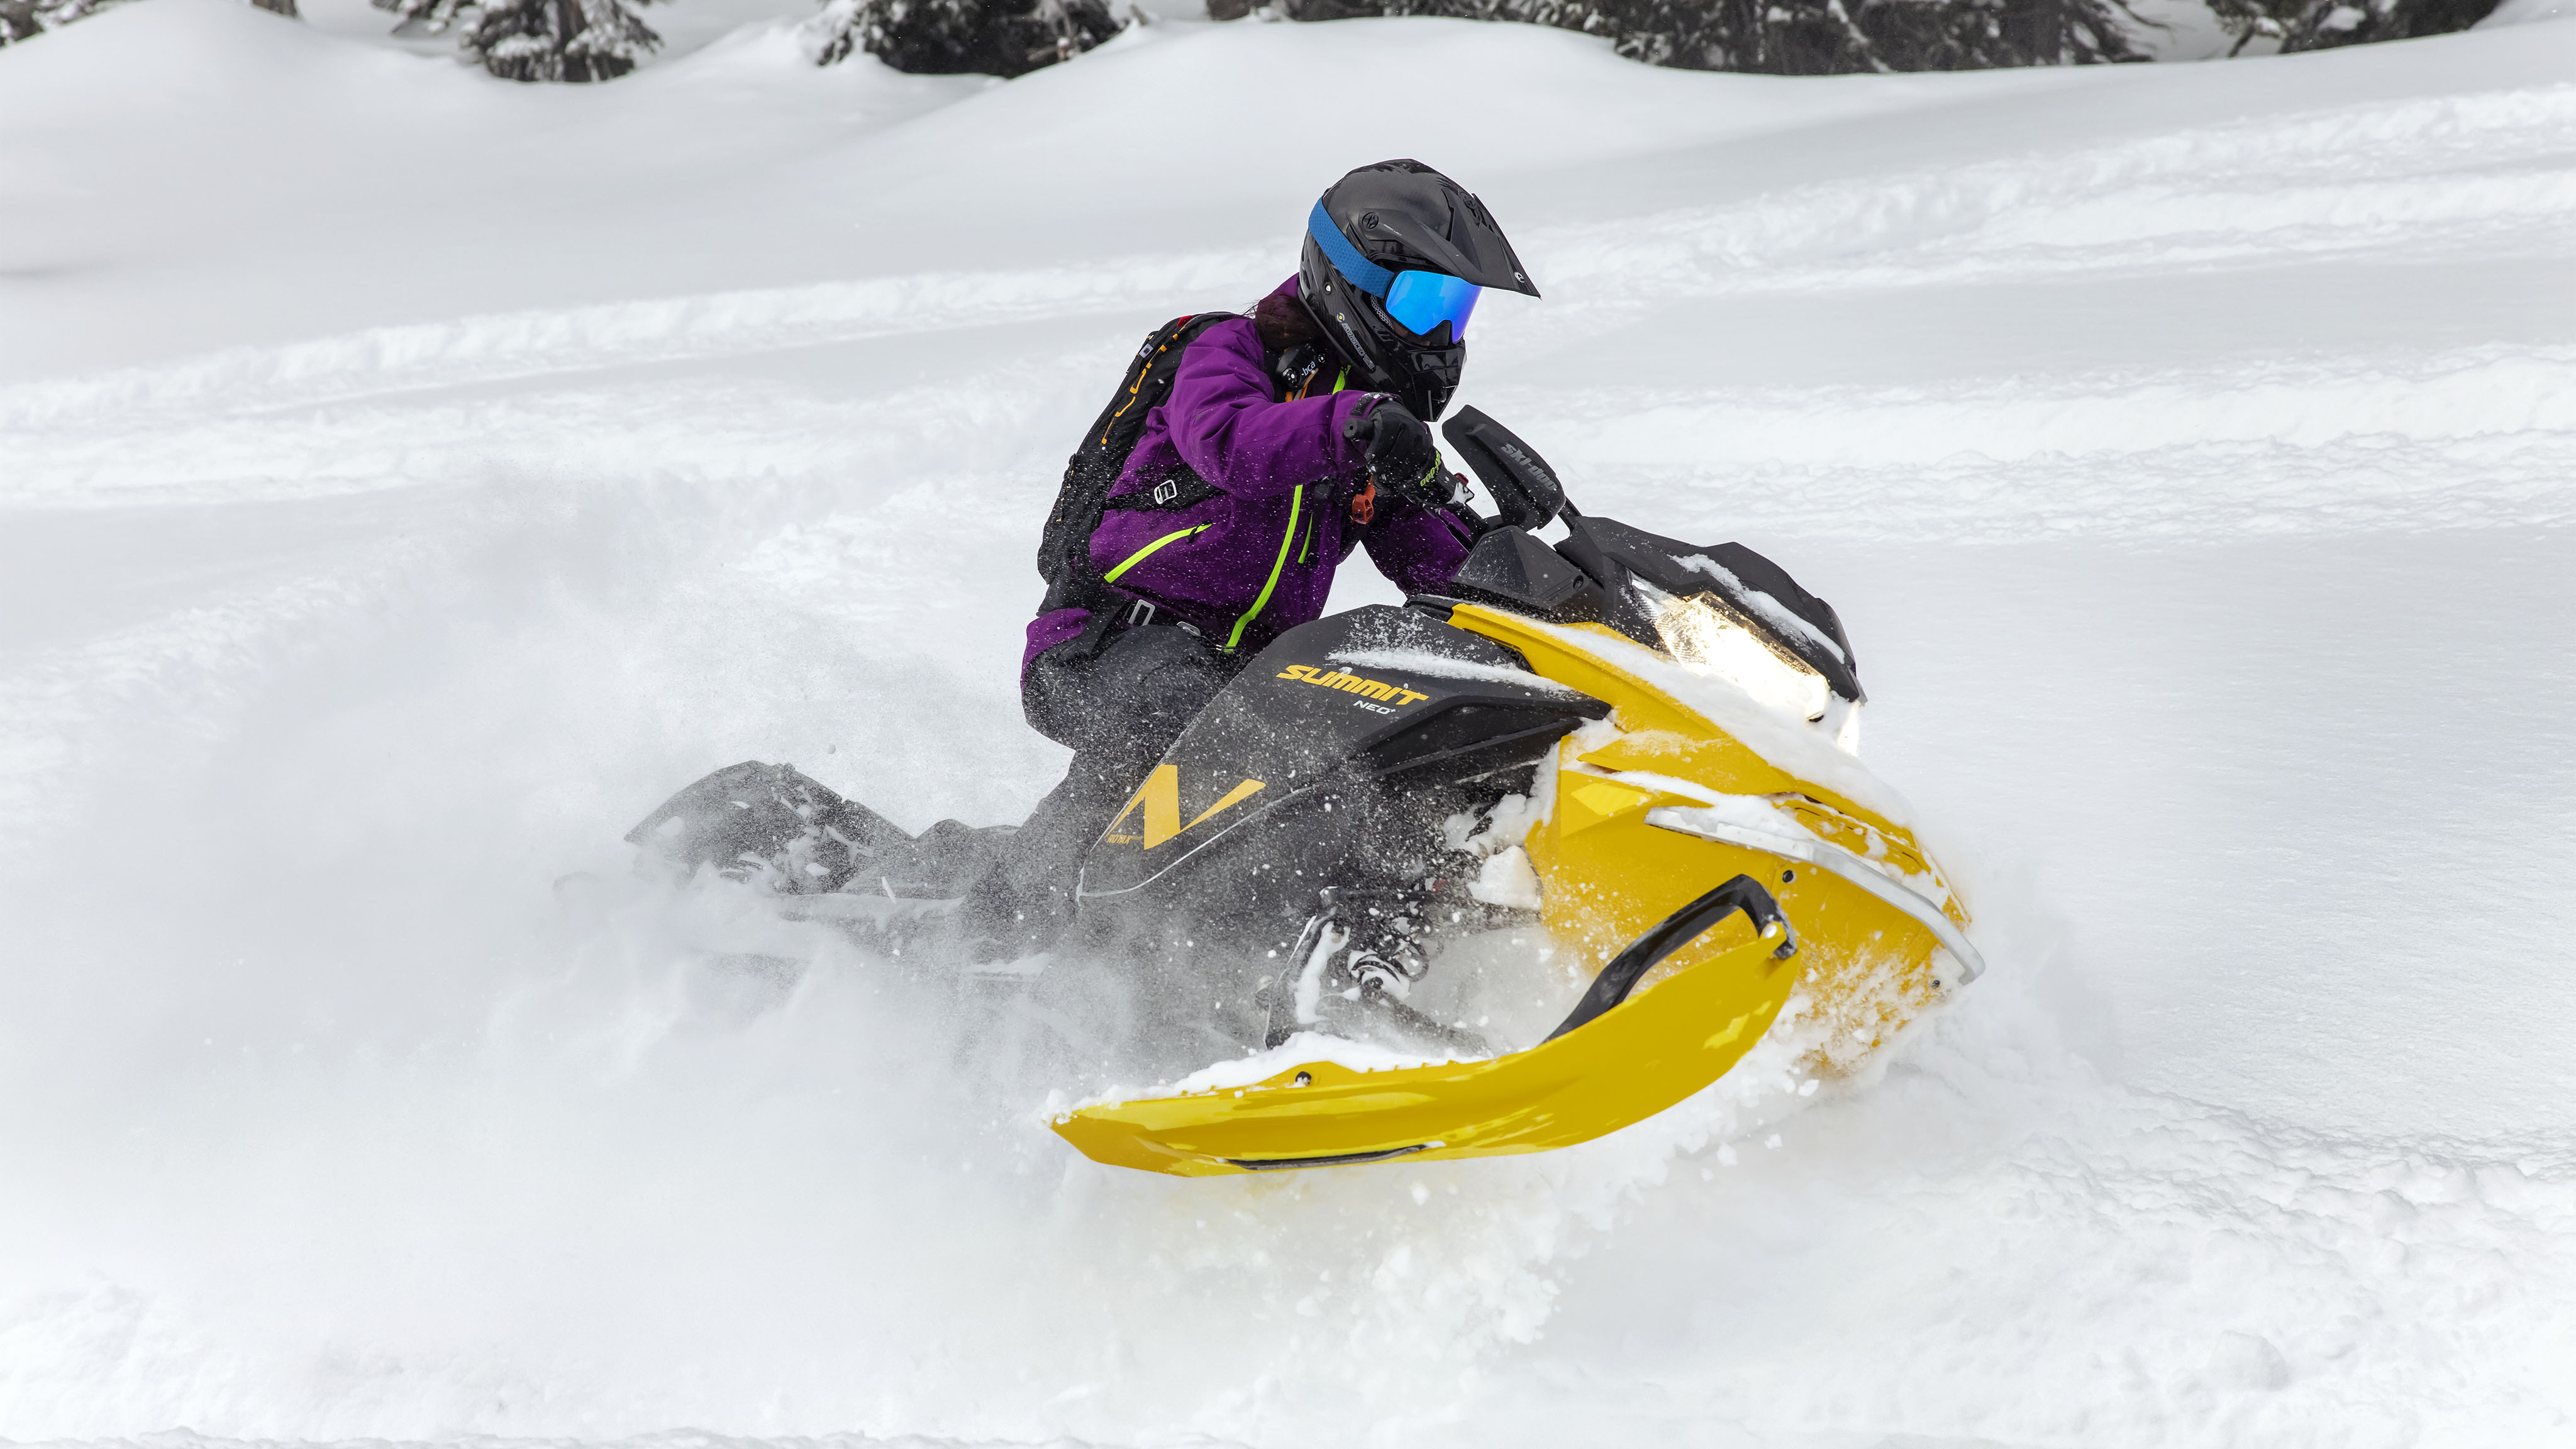 2023 Ski-Doo Summit Neo, Mid-Size snowmobile in Deep Snow